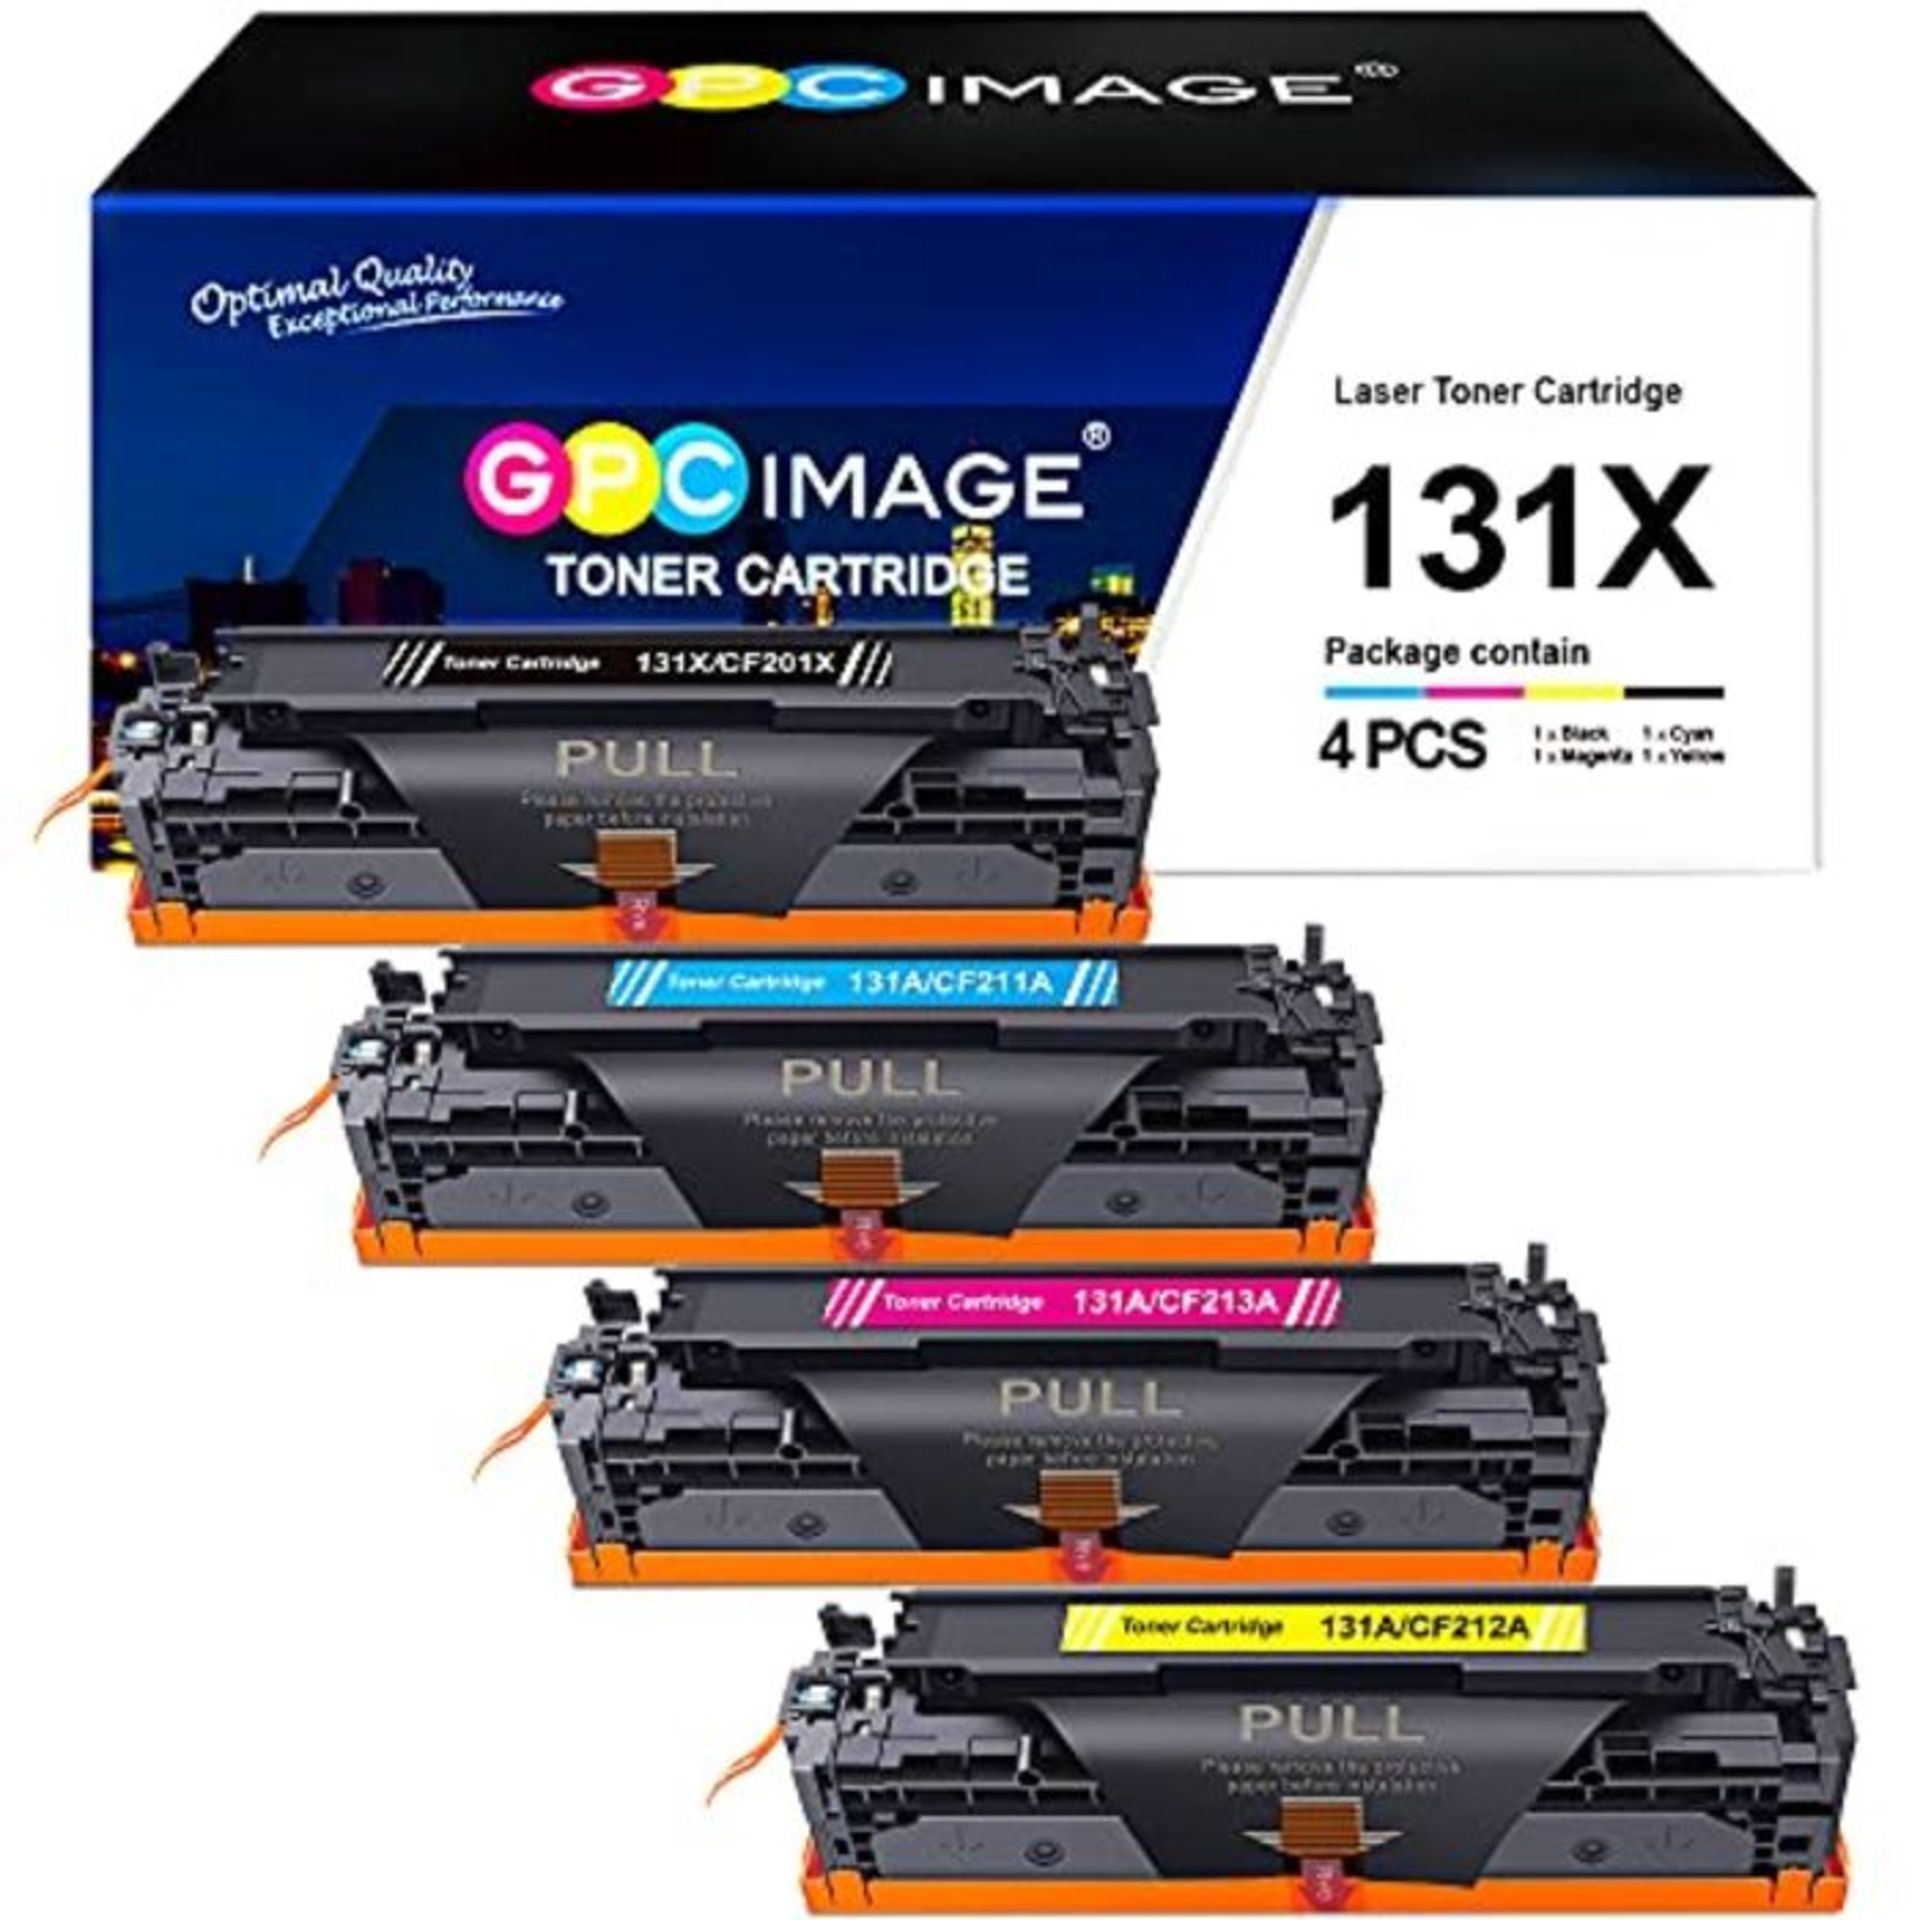 GPC Image Toner Cartridges Replacement for HP 131X 131A CF210X CF211X CF213X CF212X Co